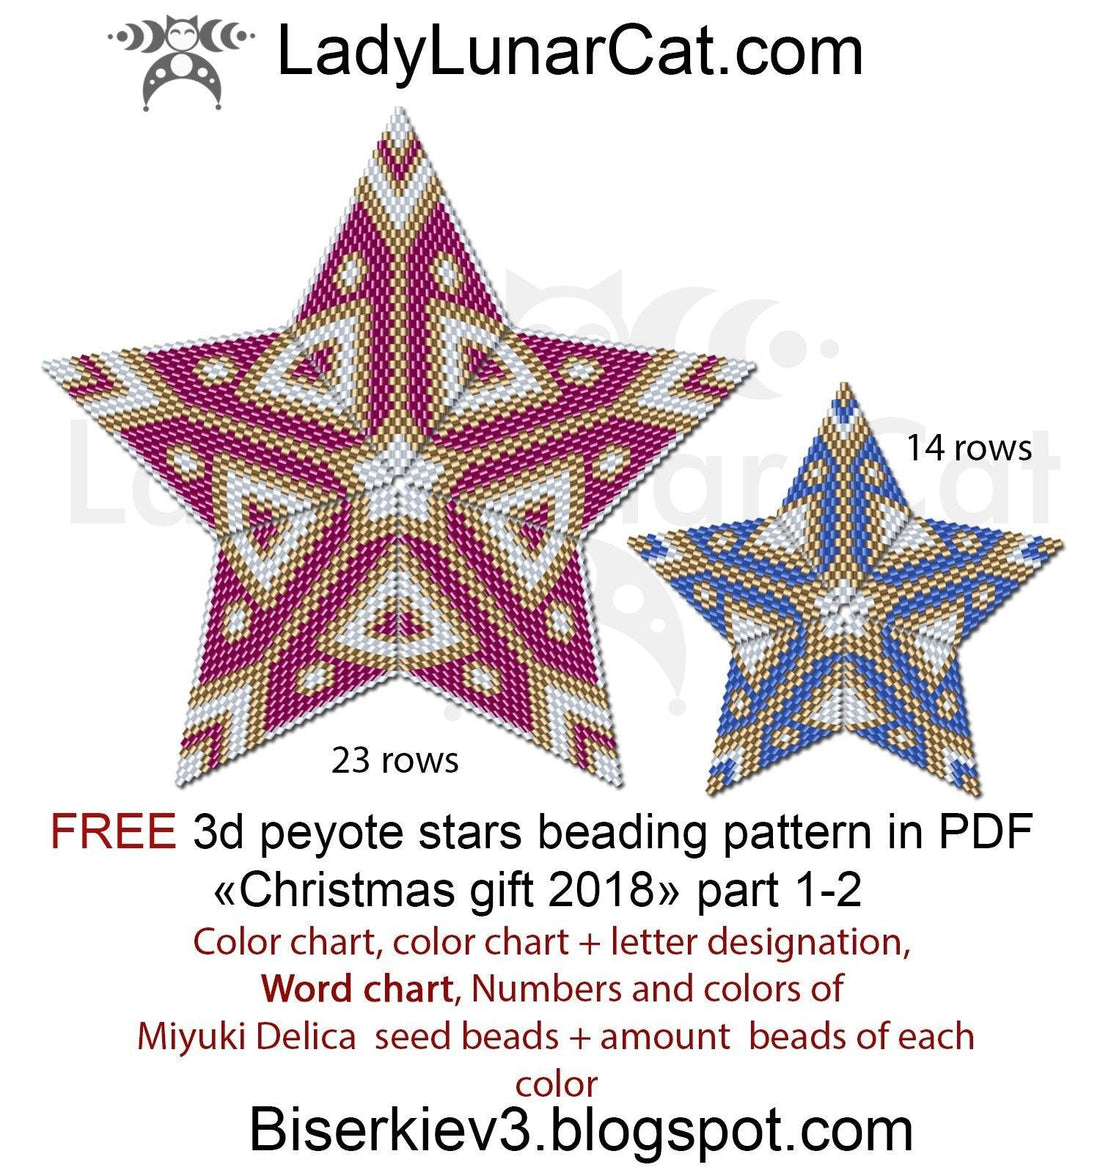 FREE Peyote 3d star patterns Christmas gift 2018 by Lady Lunar Cat LadyLunarCat